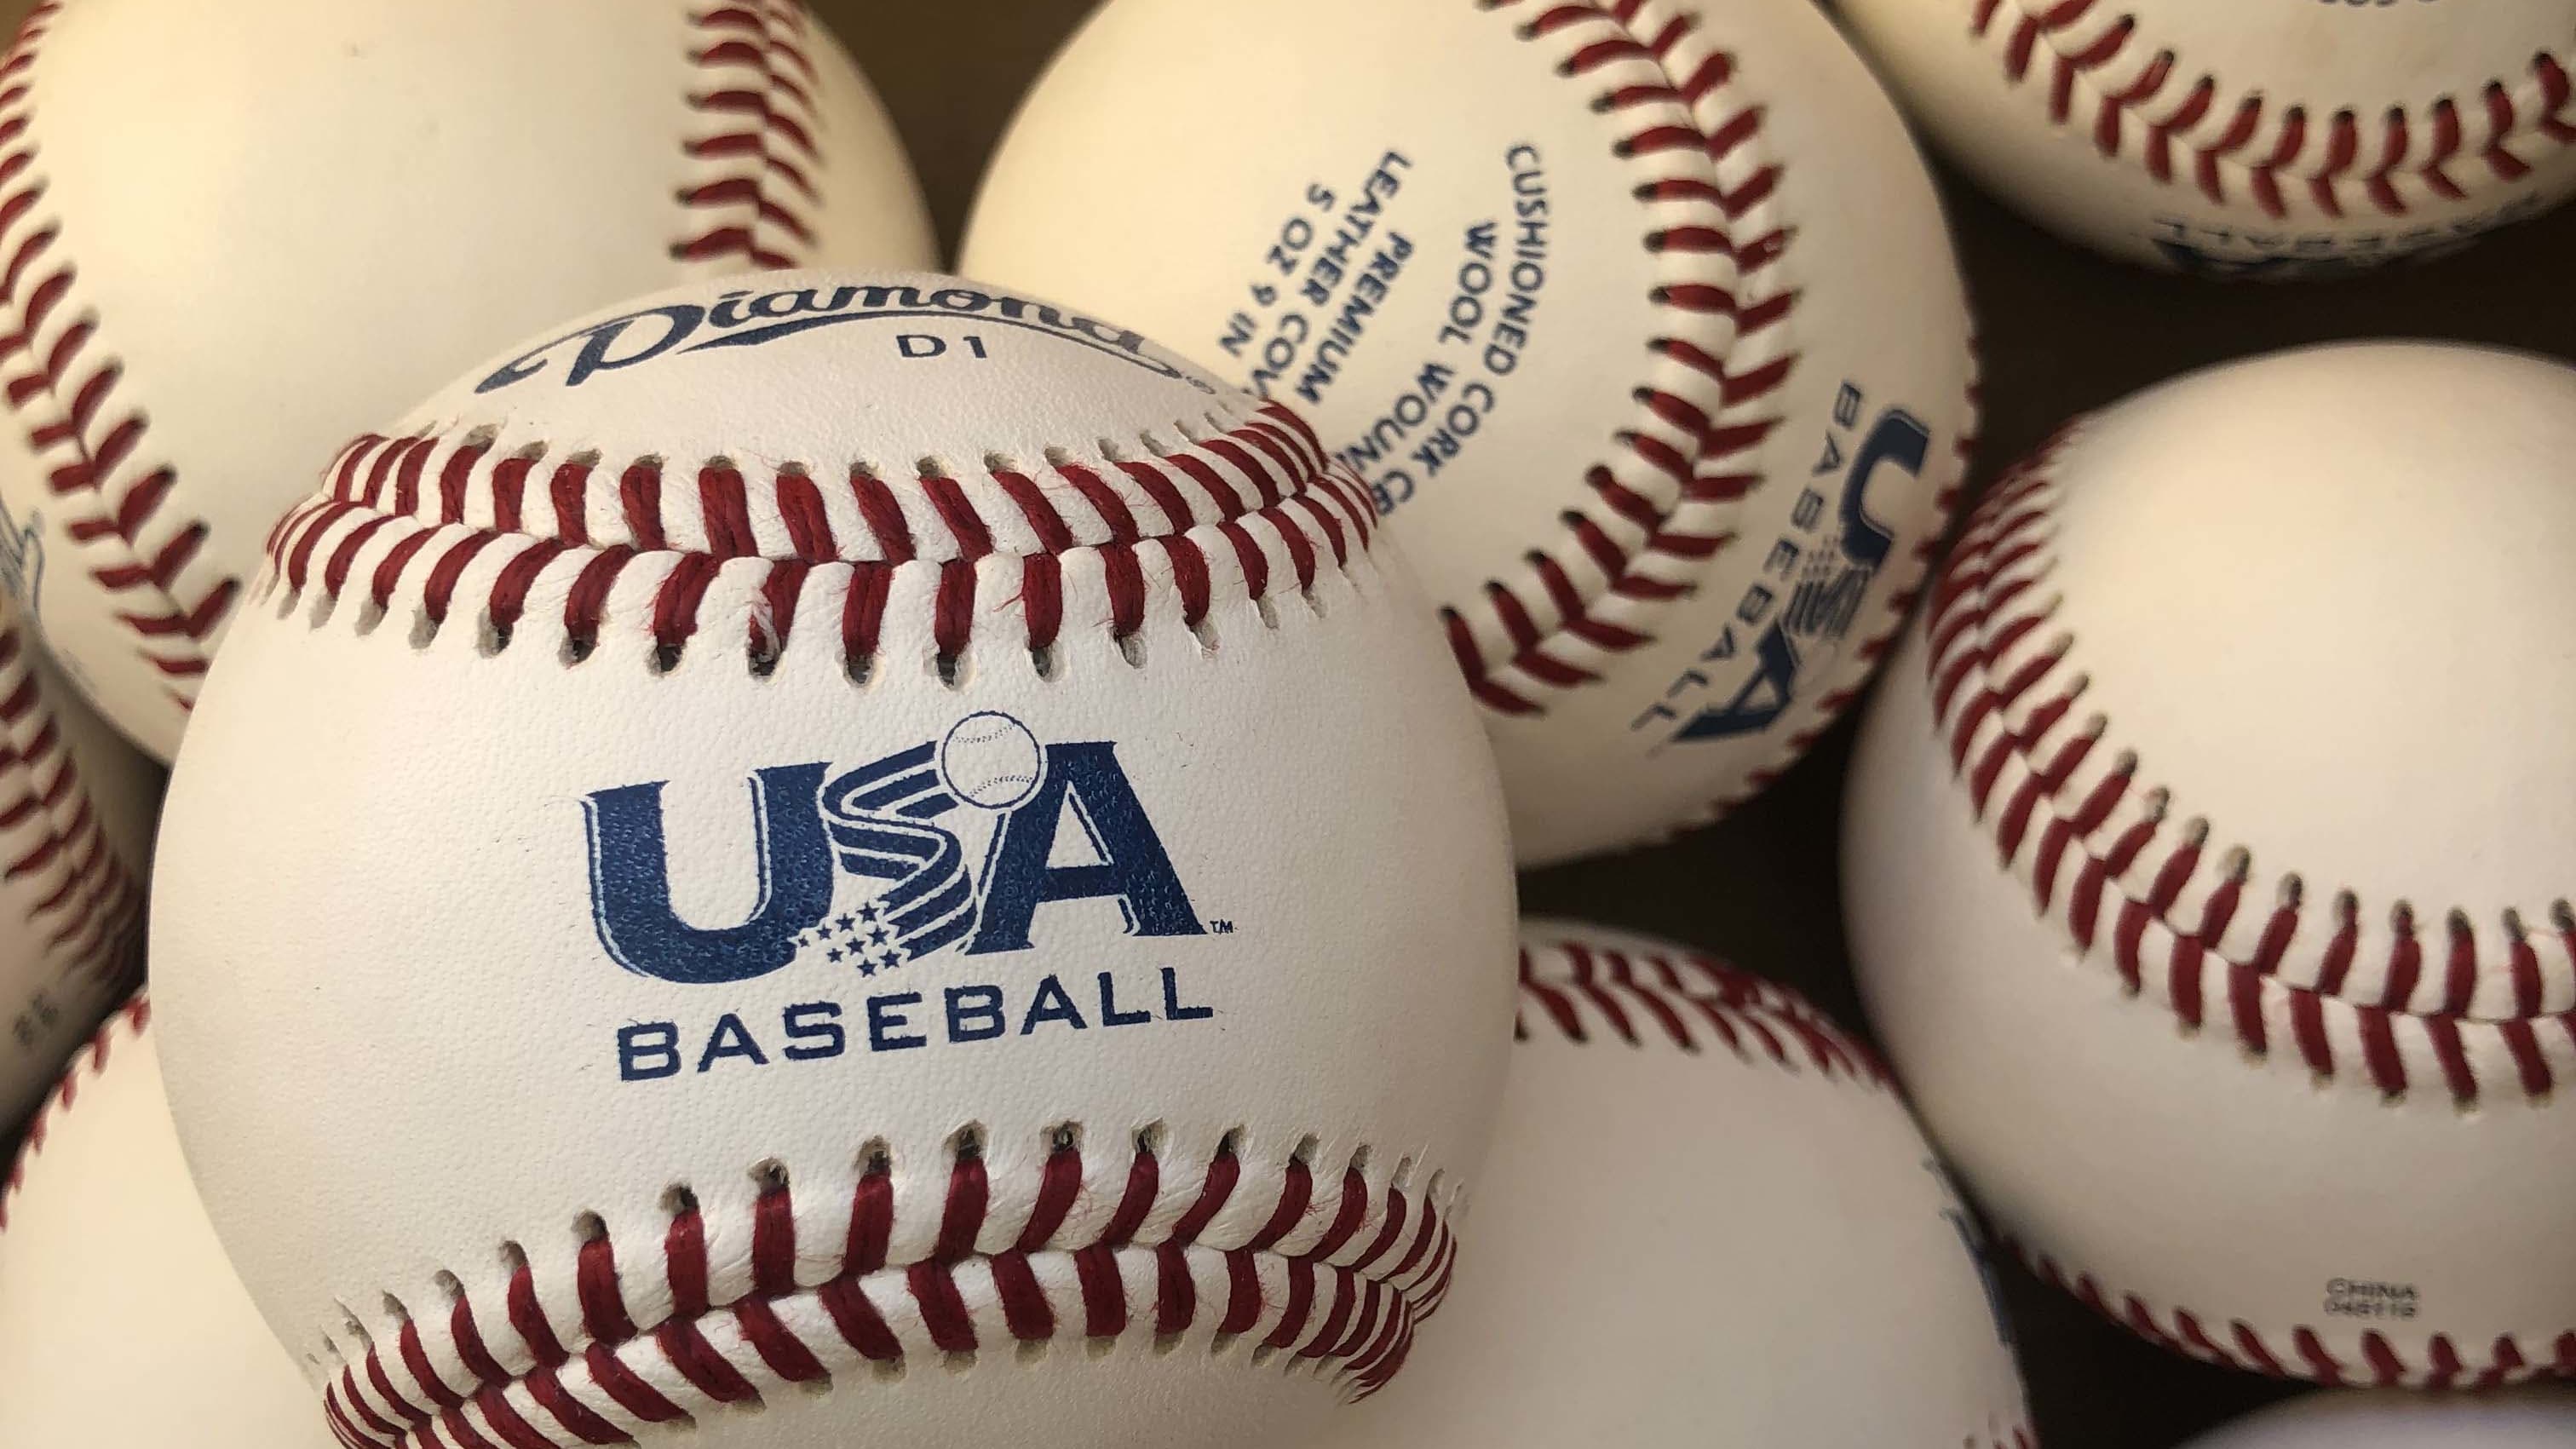 Will the Atlanta Braves change its name next? - Baseball Egg